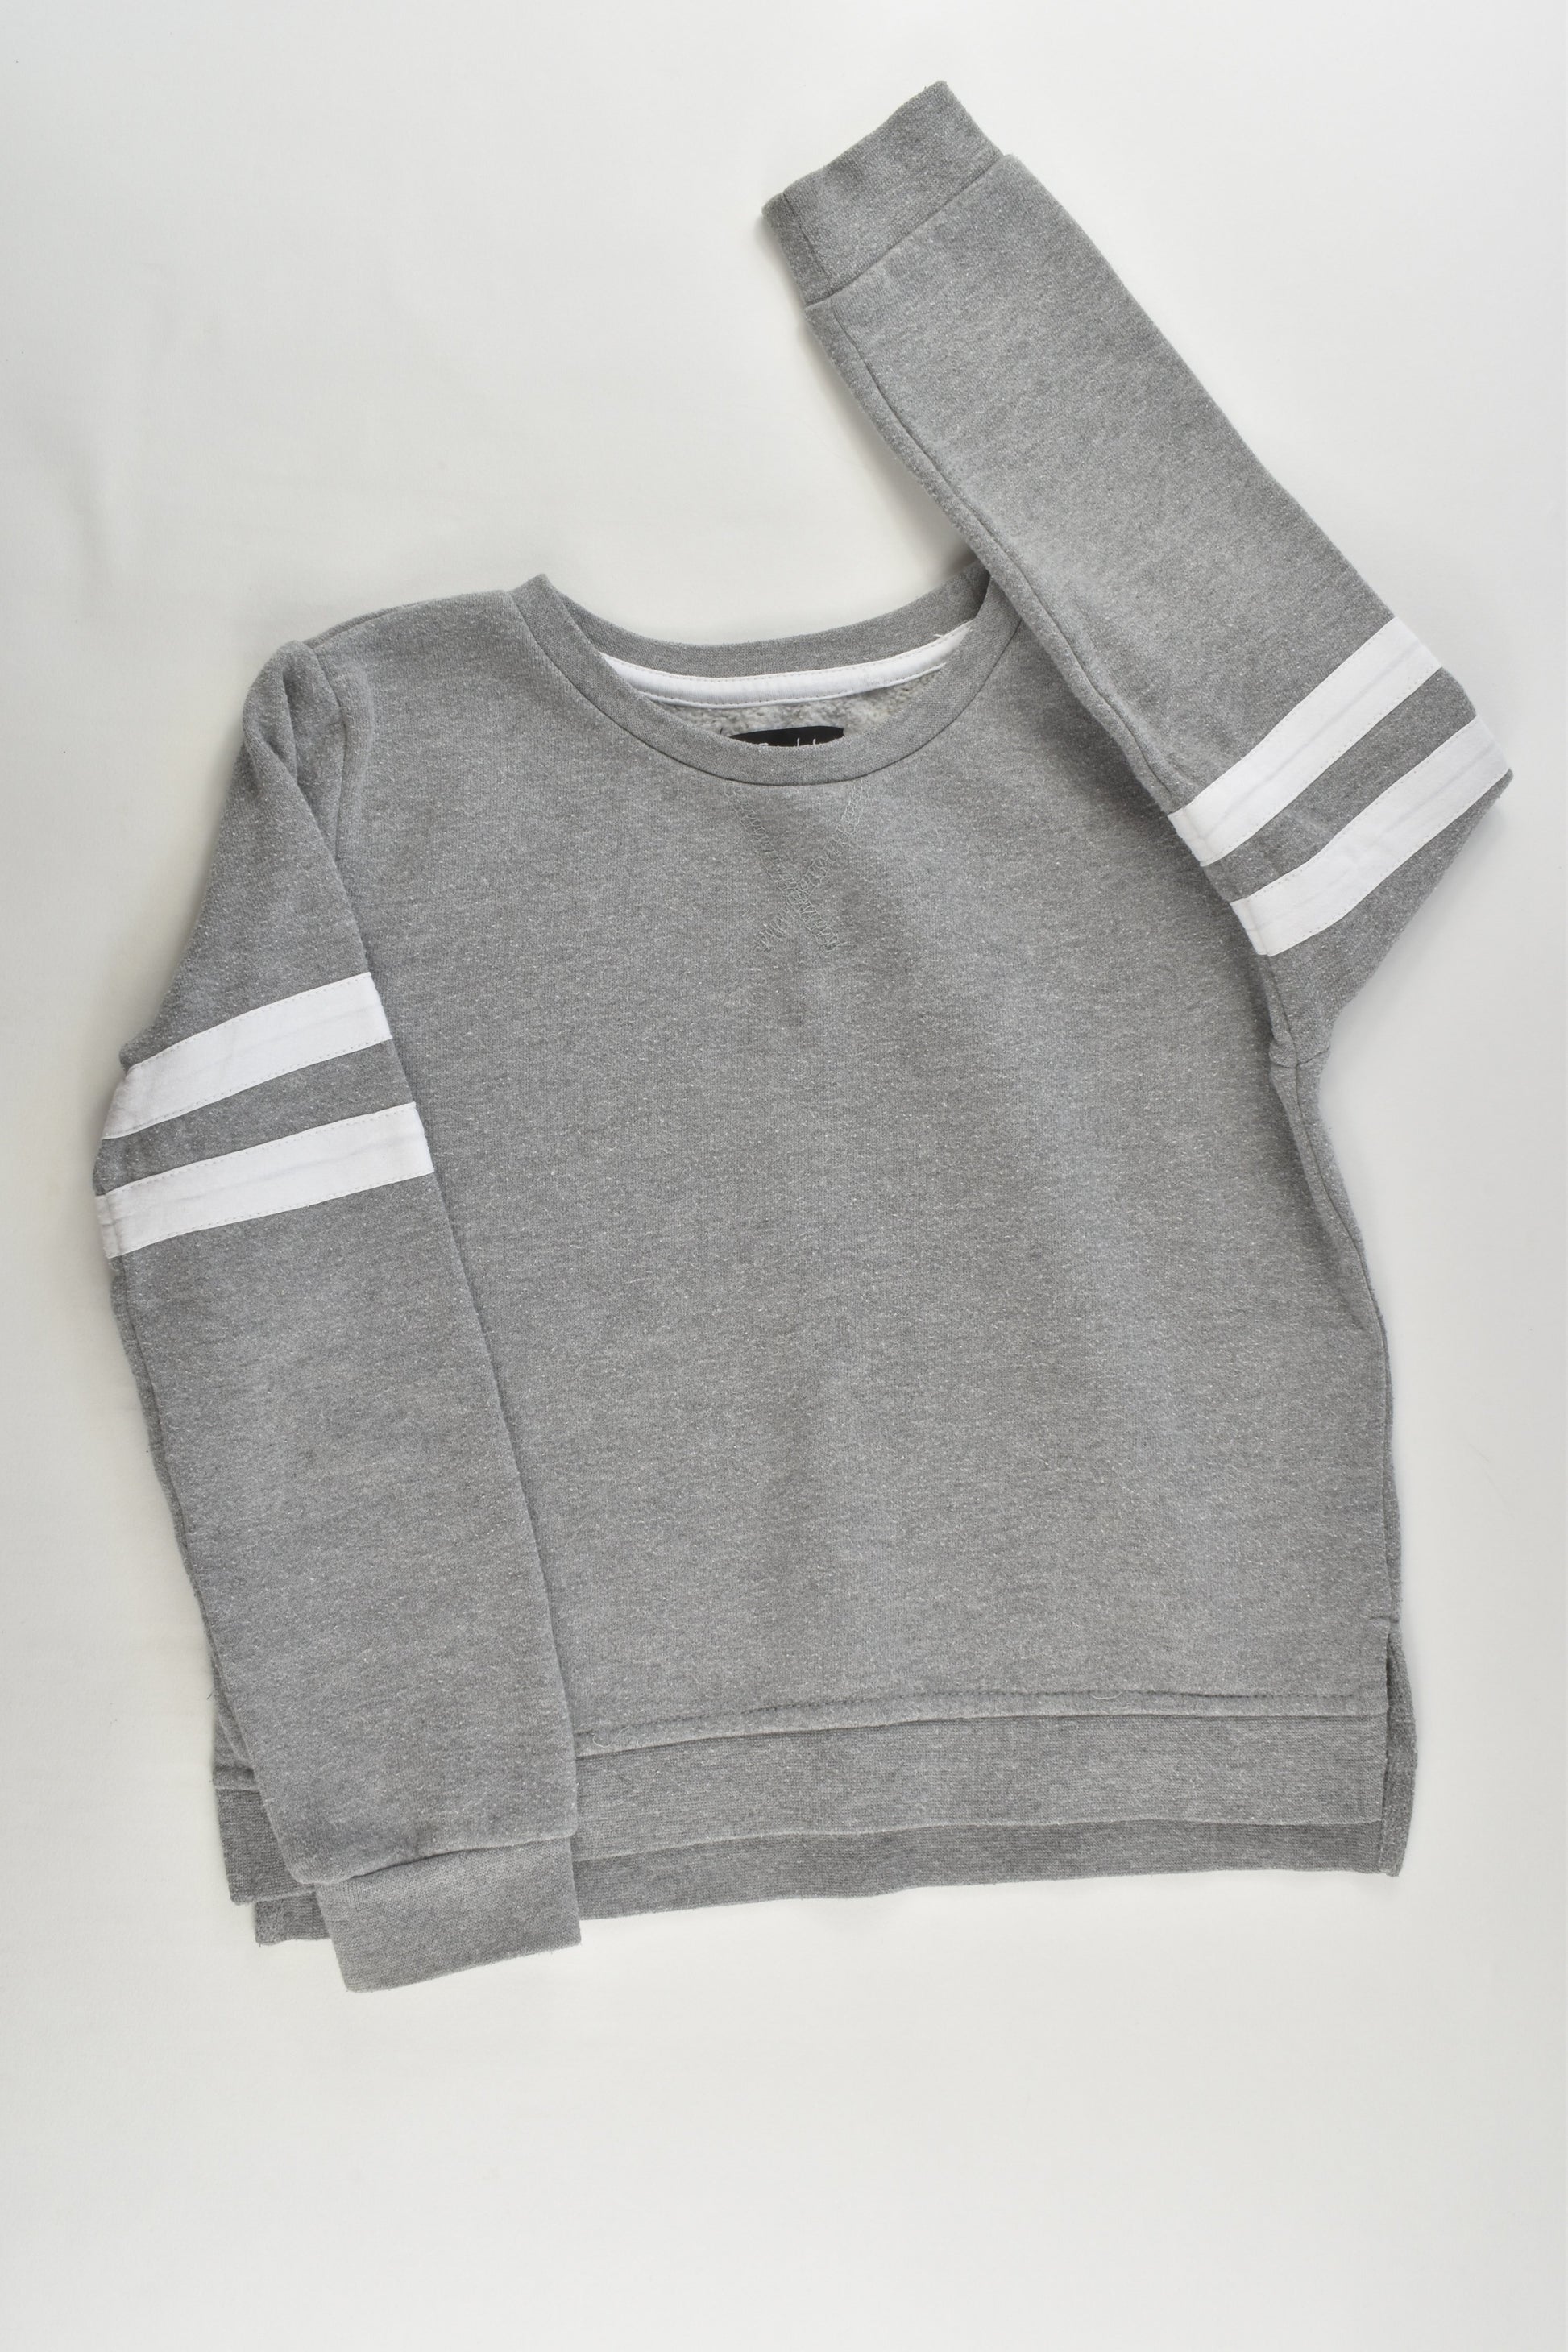 Bardot Junior Size 7 (122 cm) Sweater